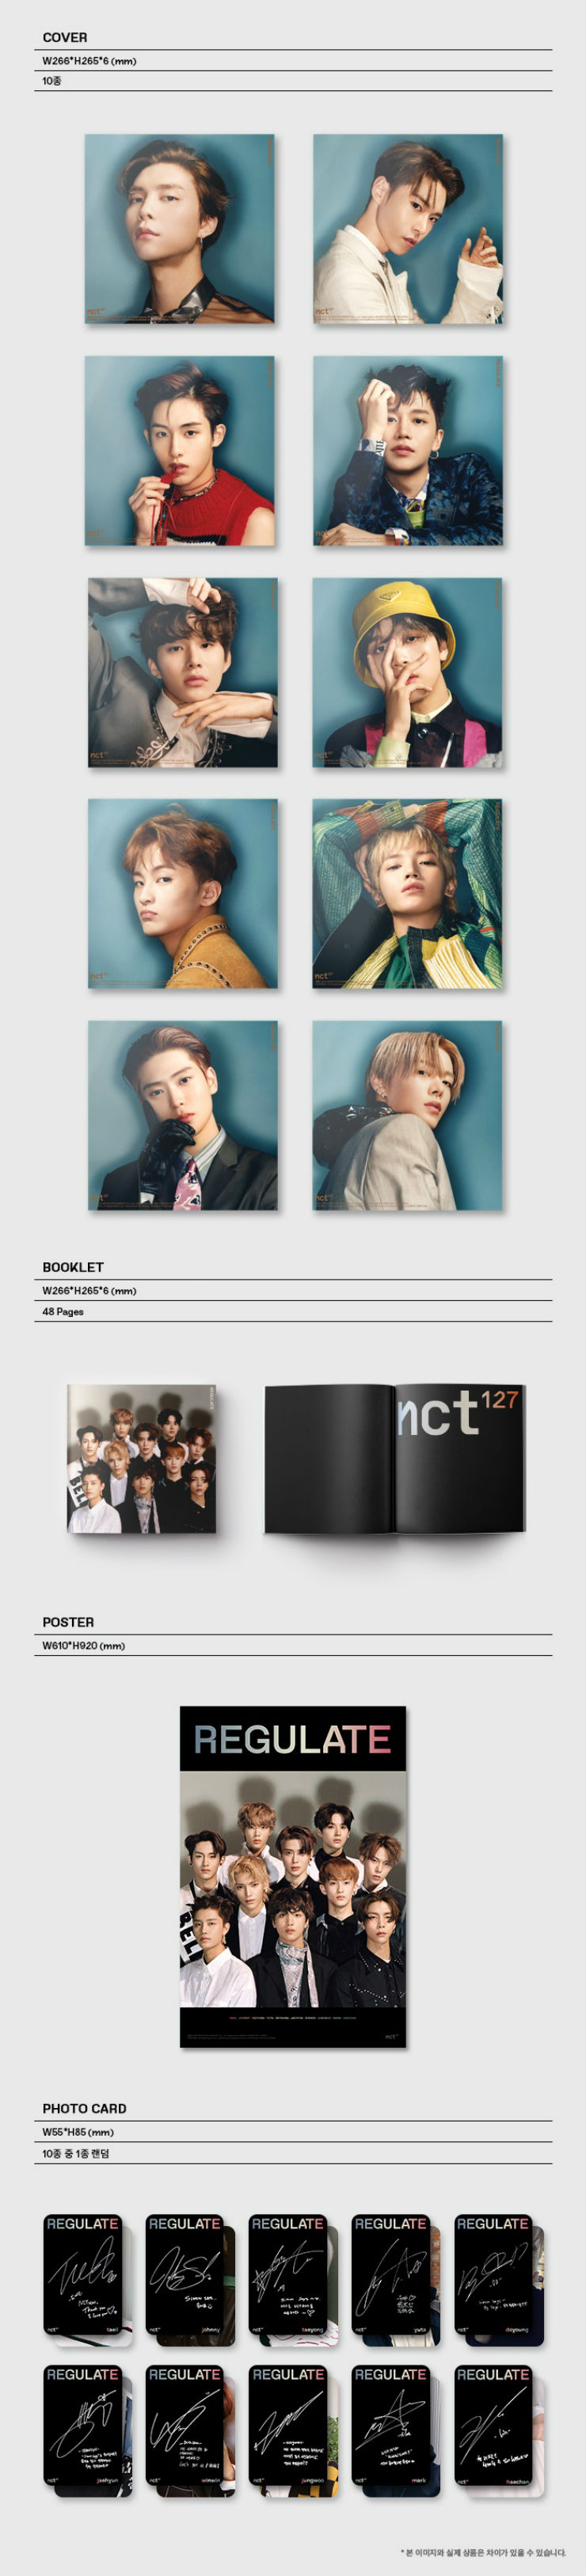 NCT 127 (NCT 127) - 1st album repack NCT #127 REGULATE